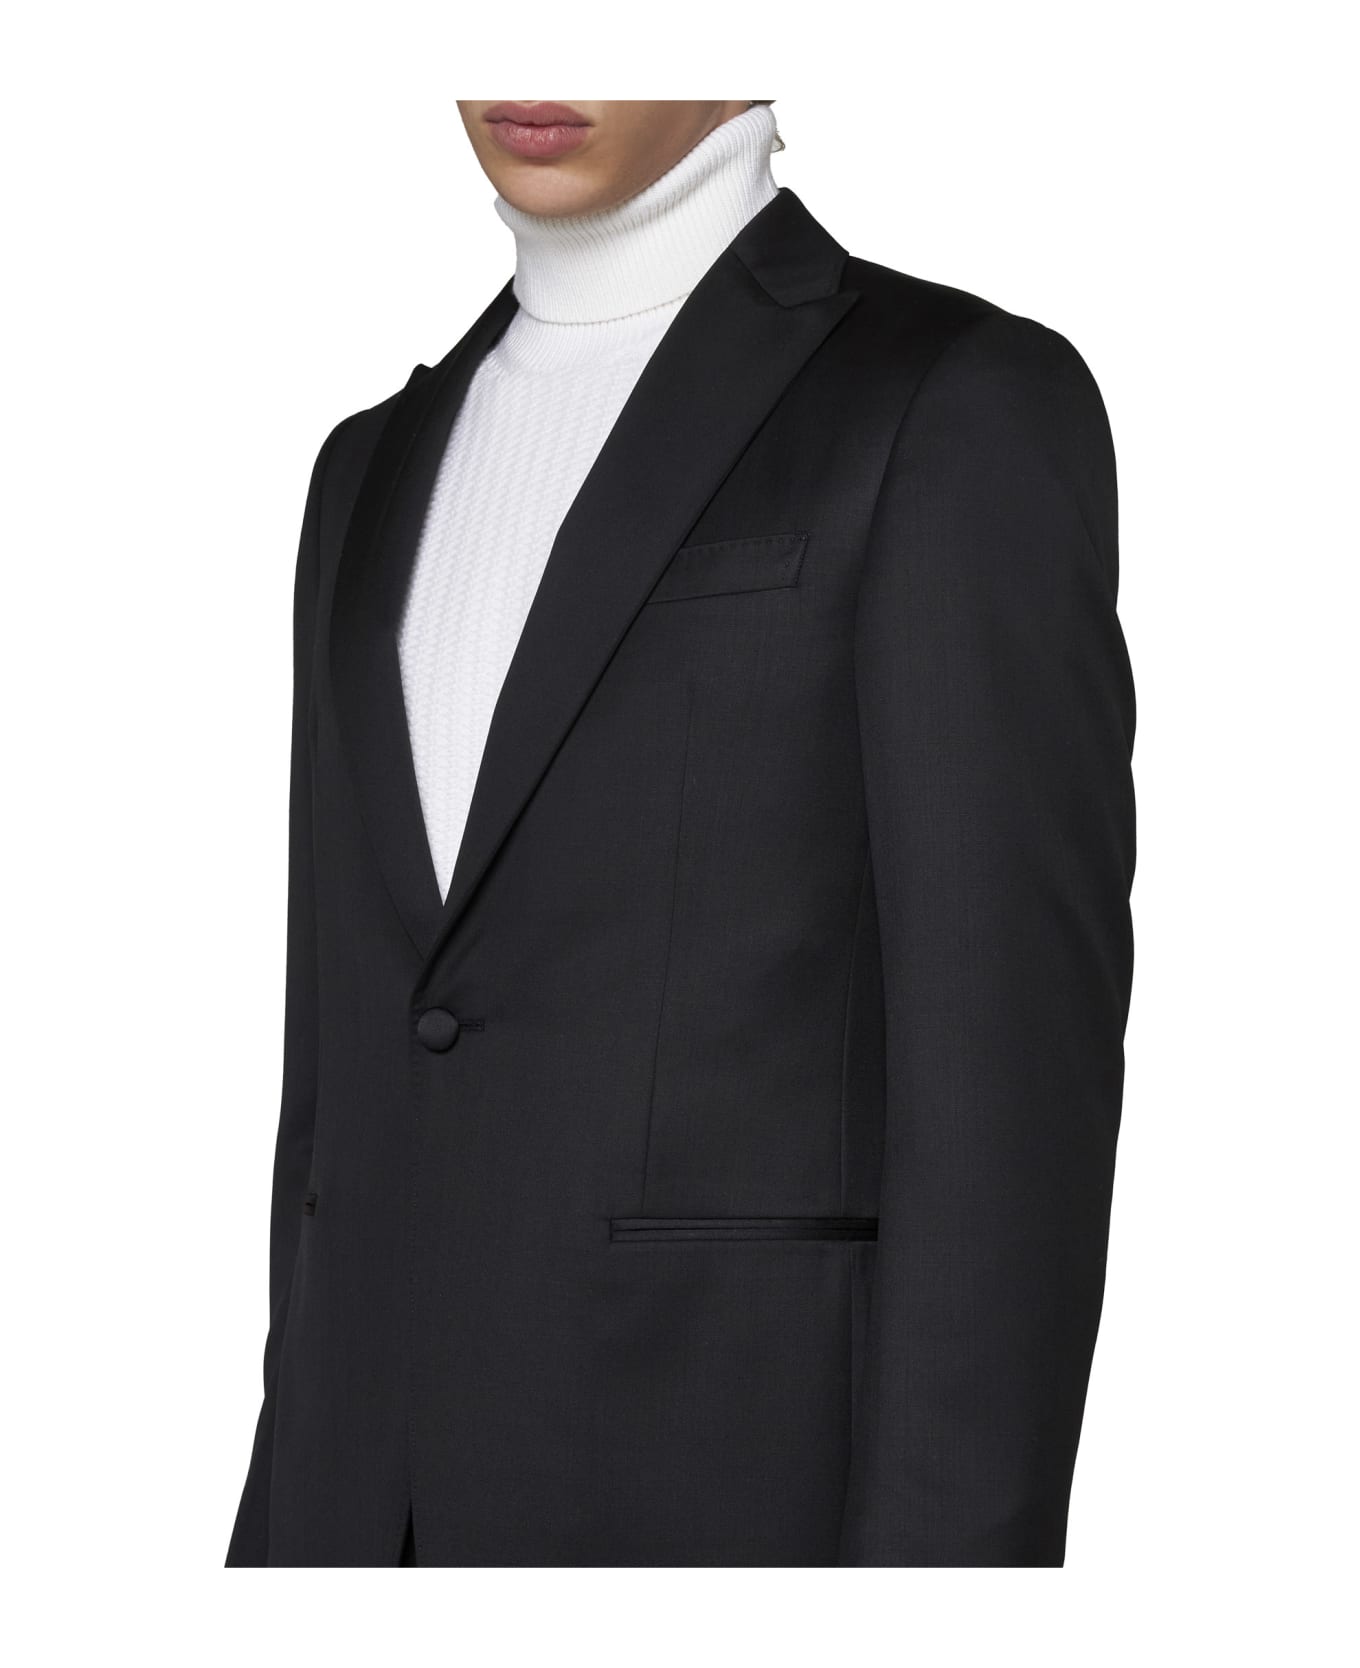 Zegna Suit - Black スーツ